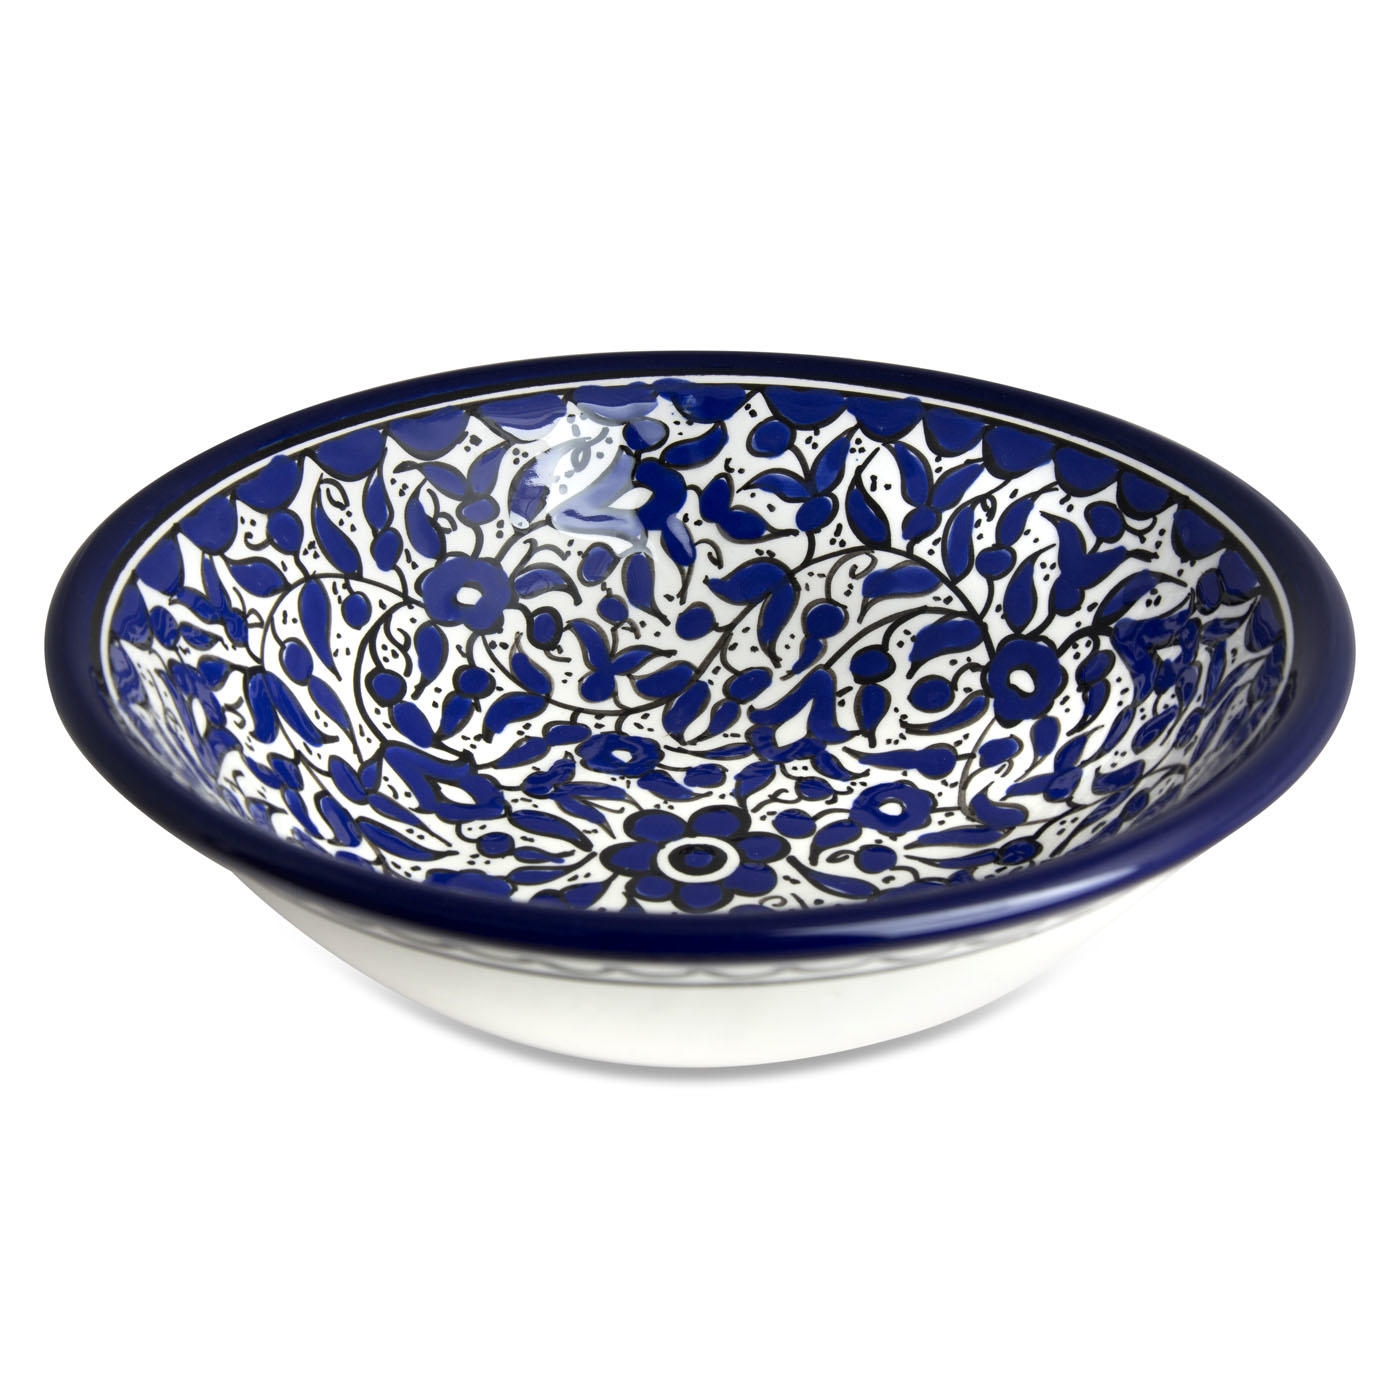 Armenian Ceramics Extra Large Serving Bowl - Blue Flowers - 1